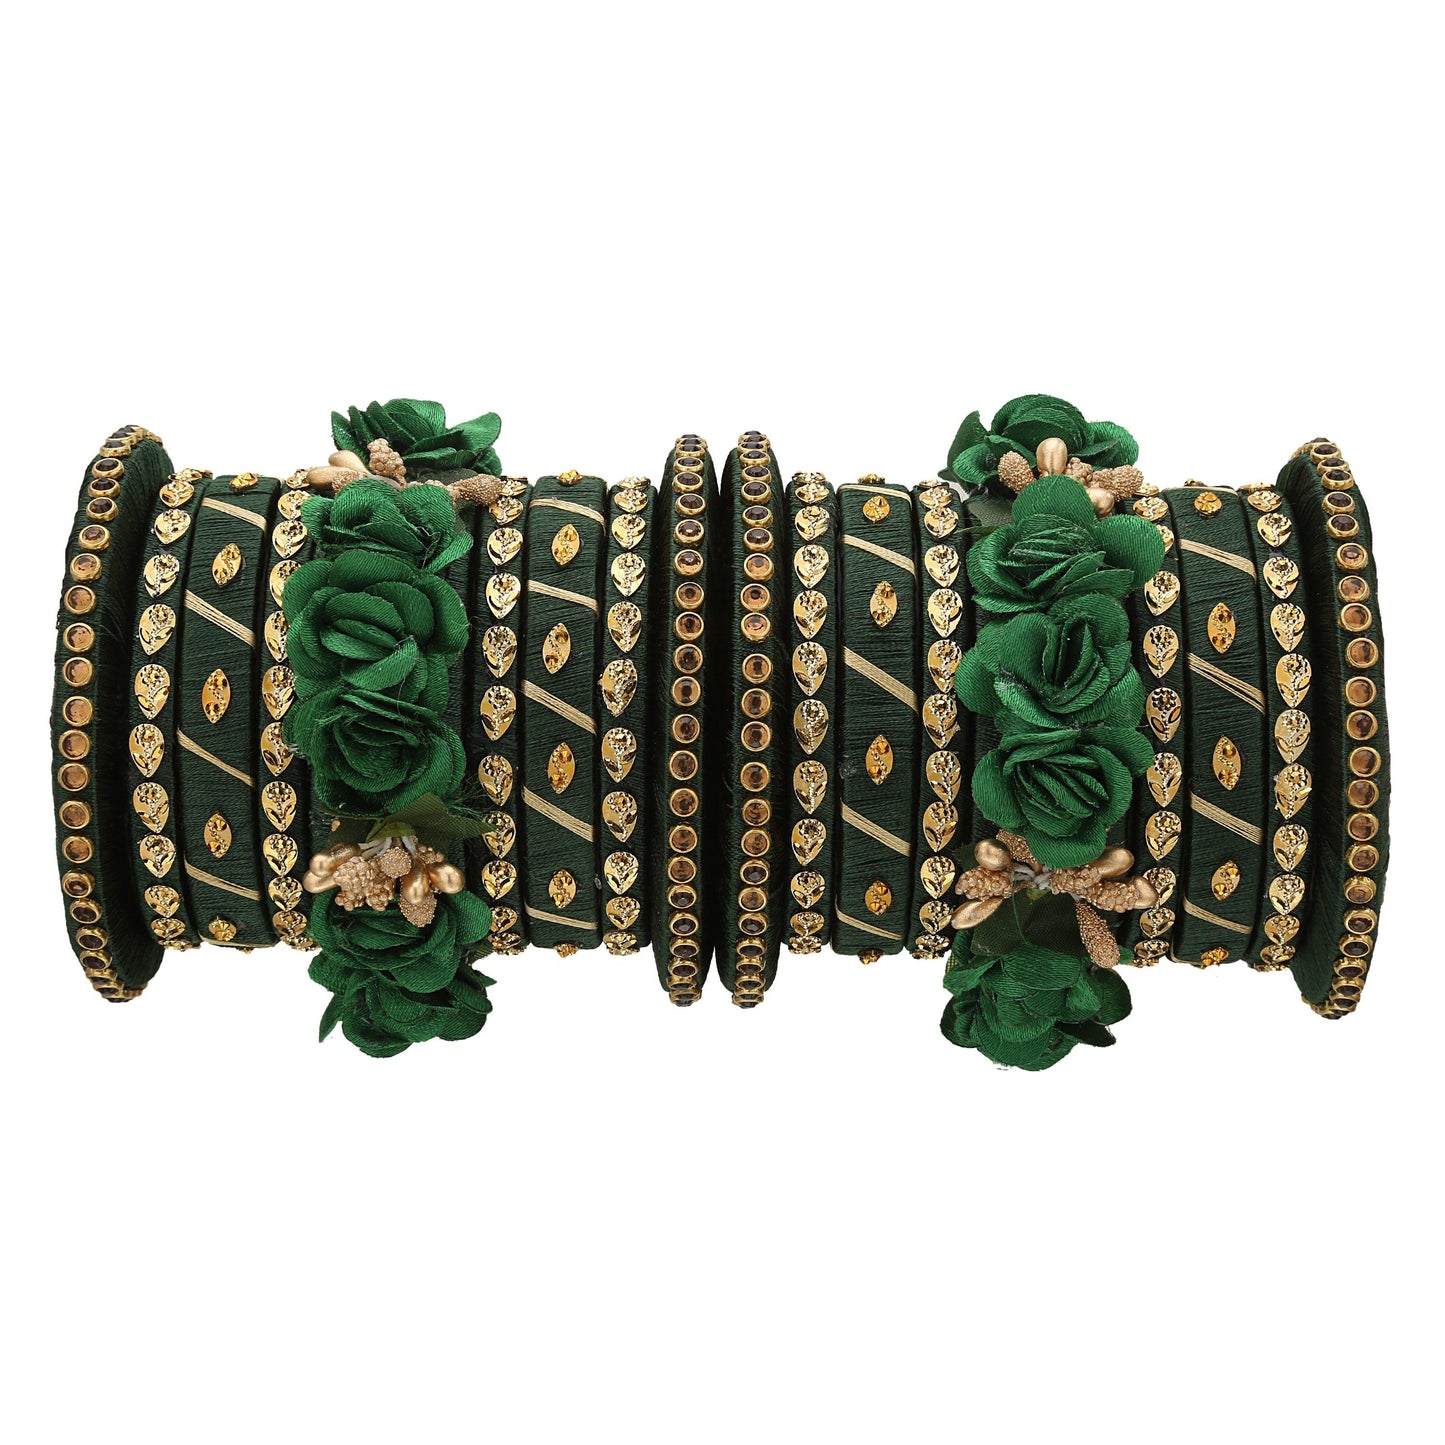 sukriti stylish handmade bottle-green flower designer silk thread plastic bridal chuda wedding bangles for women – set of 18